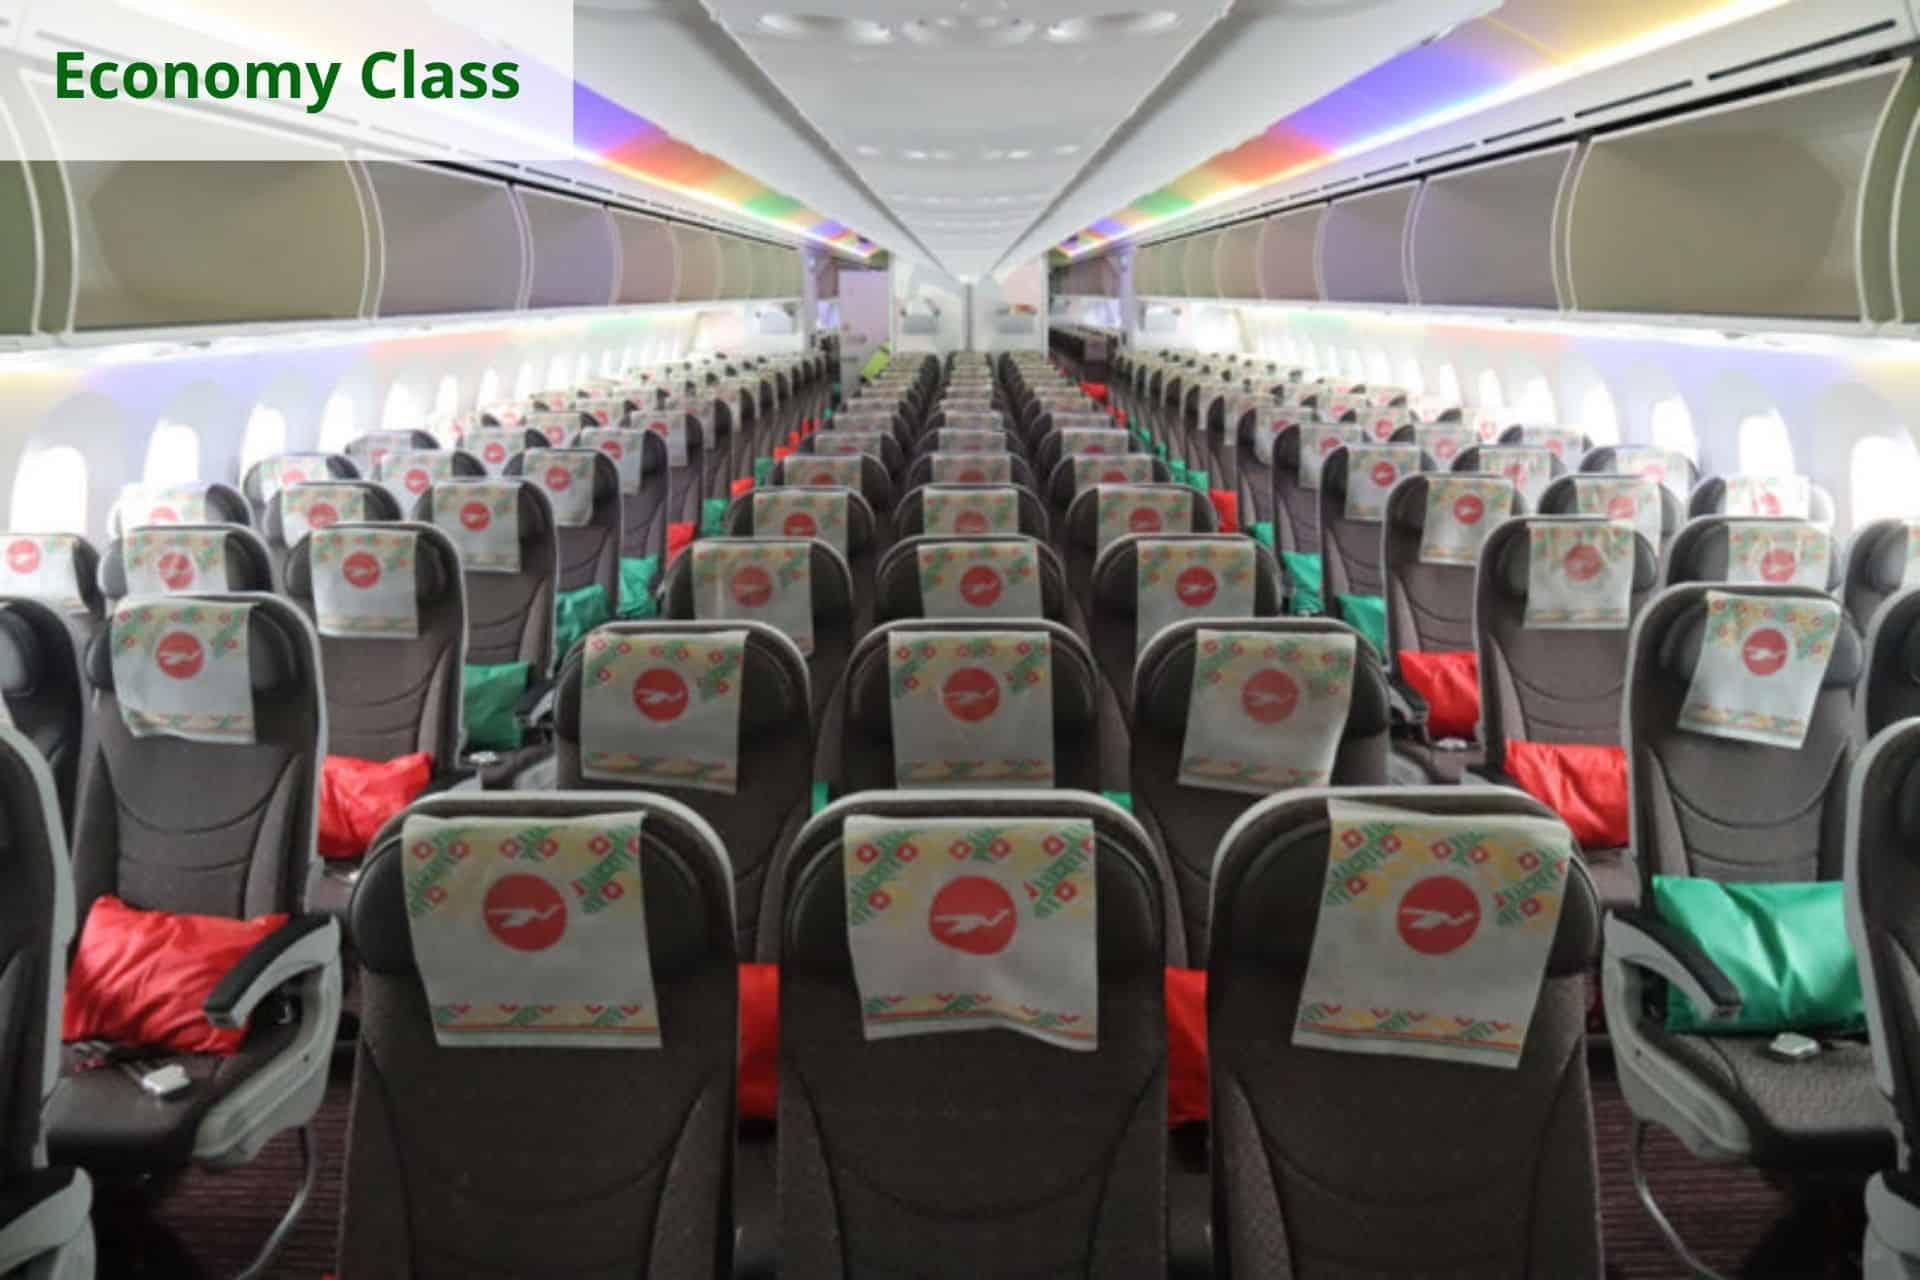 Biman Bangladesh Airlines Economy Class